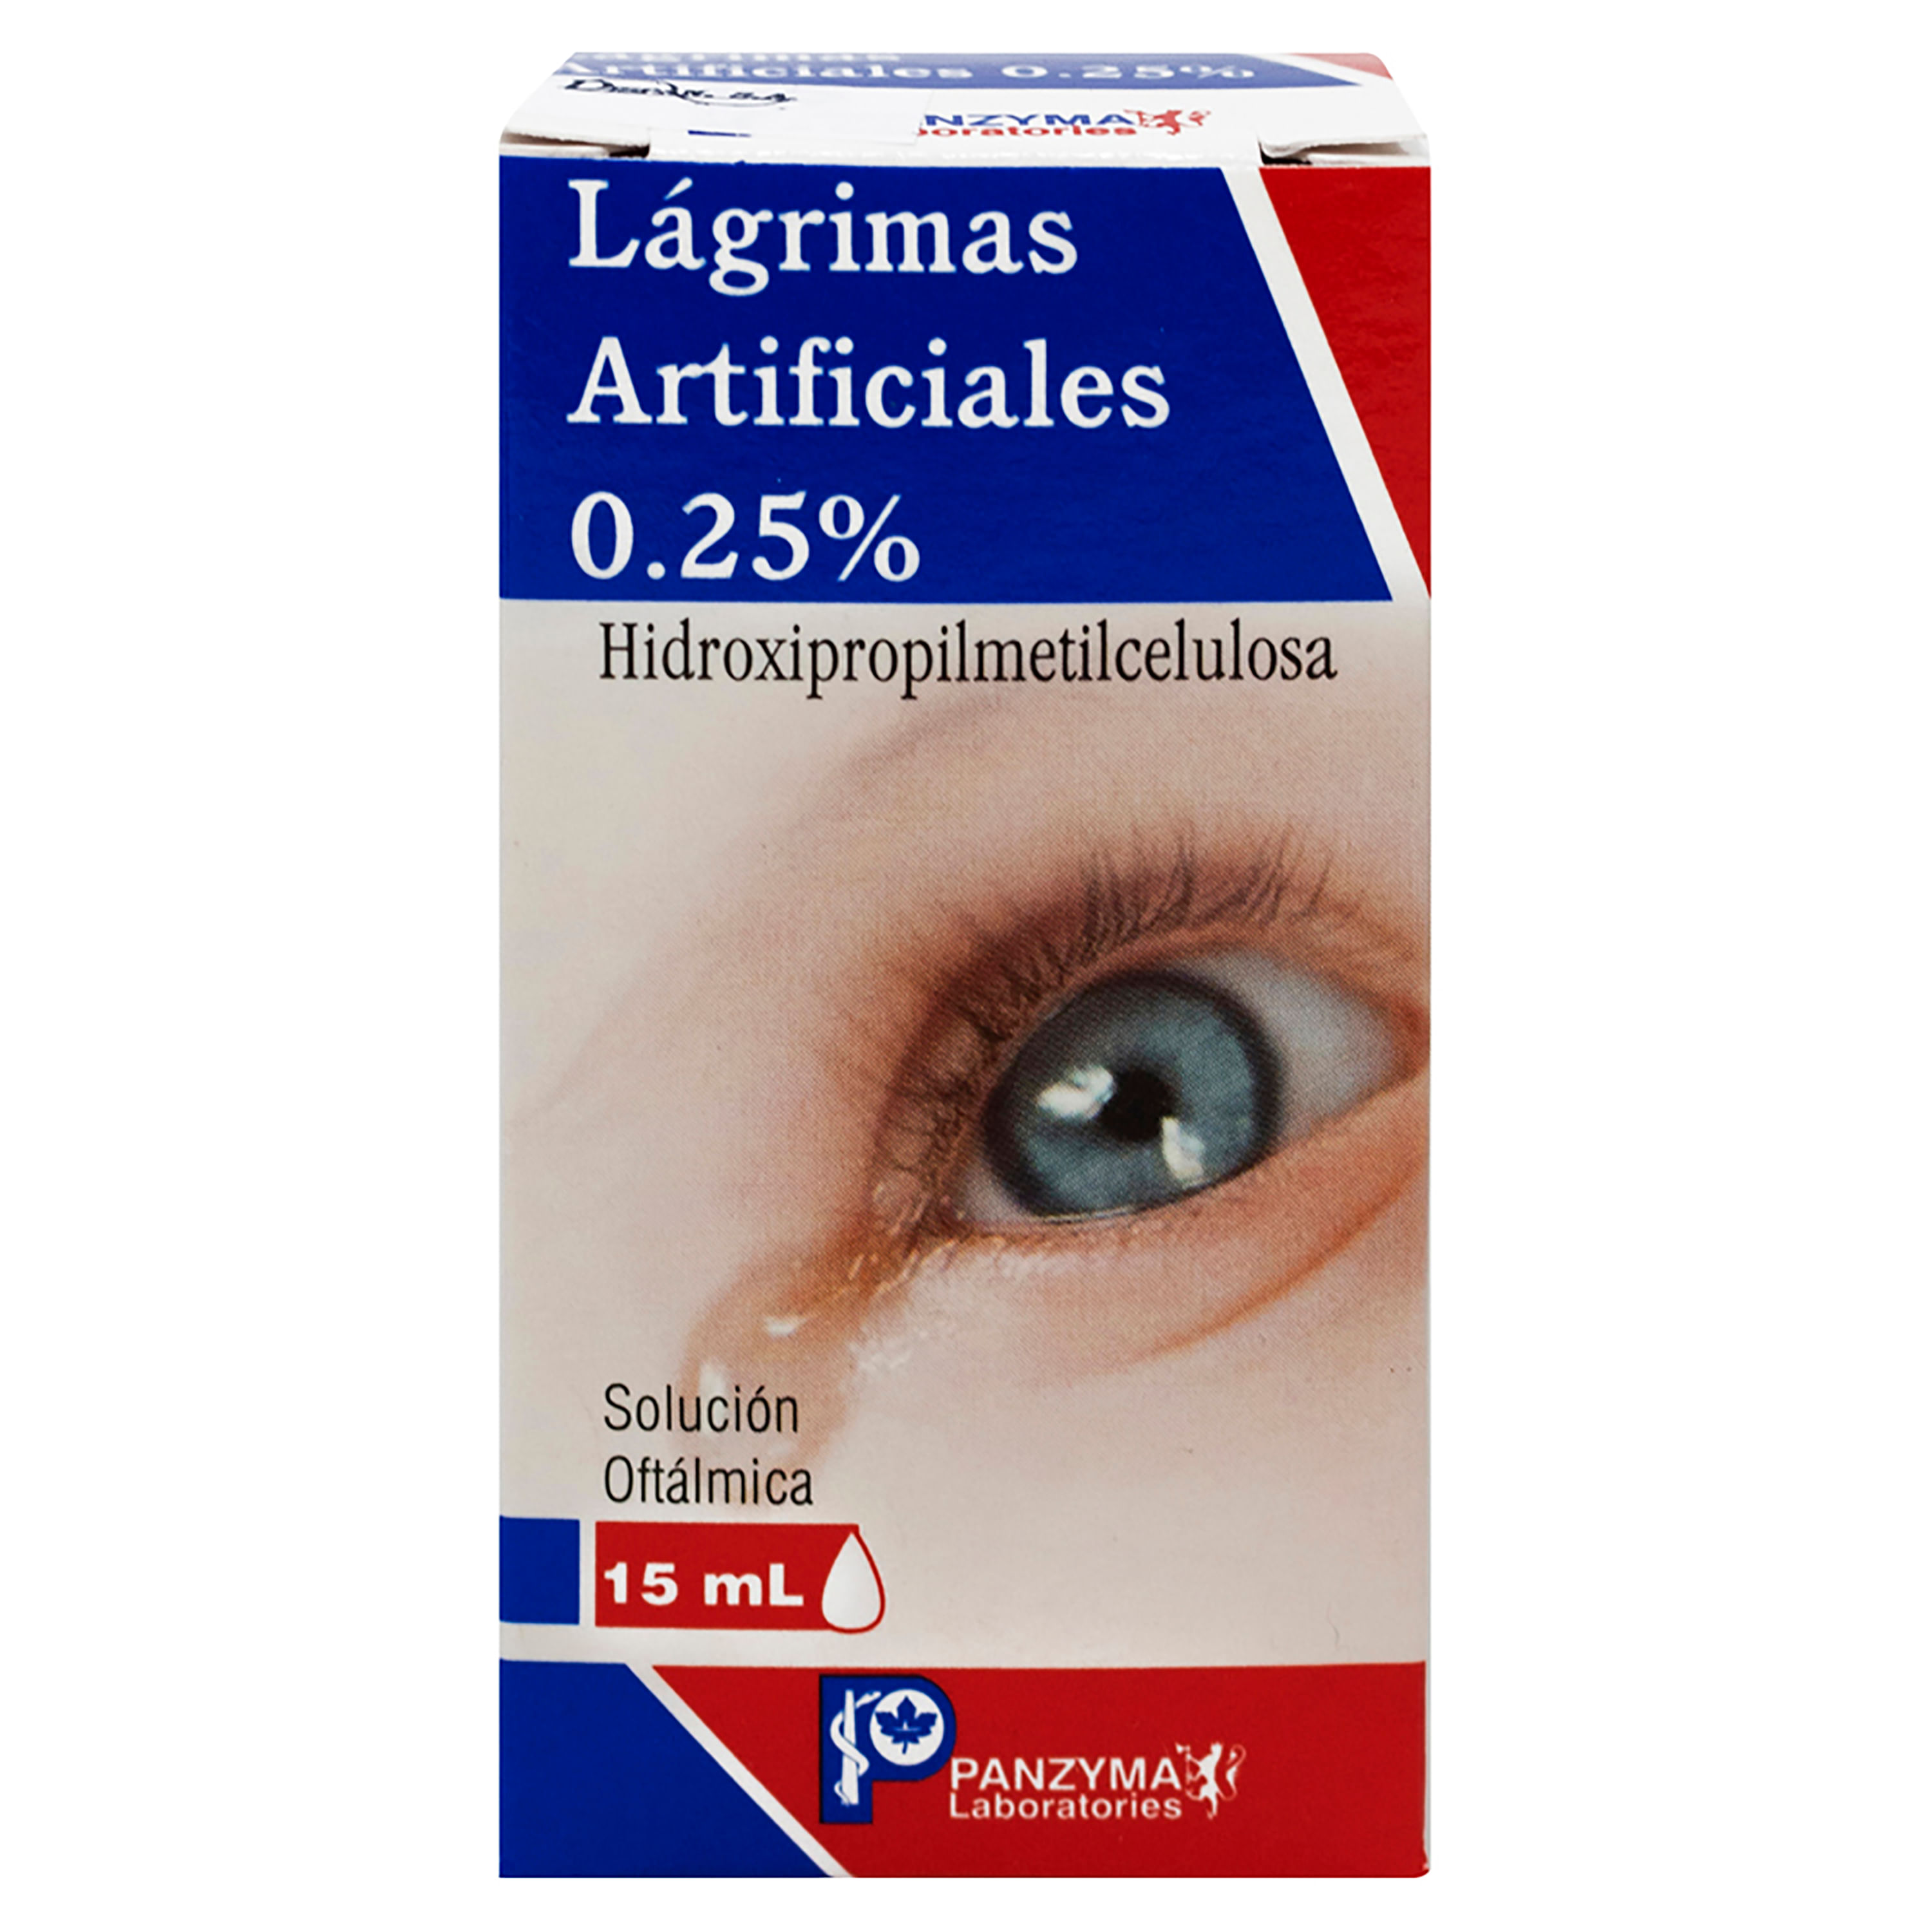 Lagrimas-Artificiales-Panzyma-Colirio-15ml-1-24369